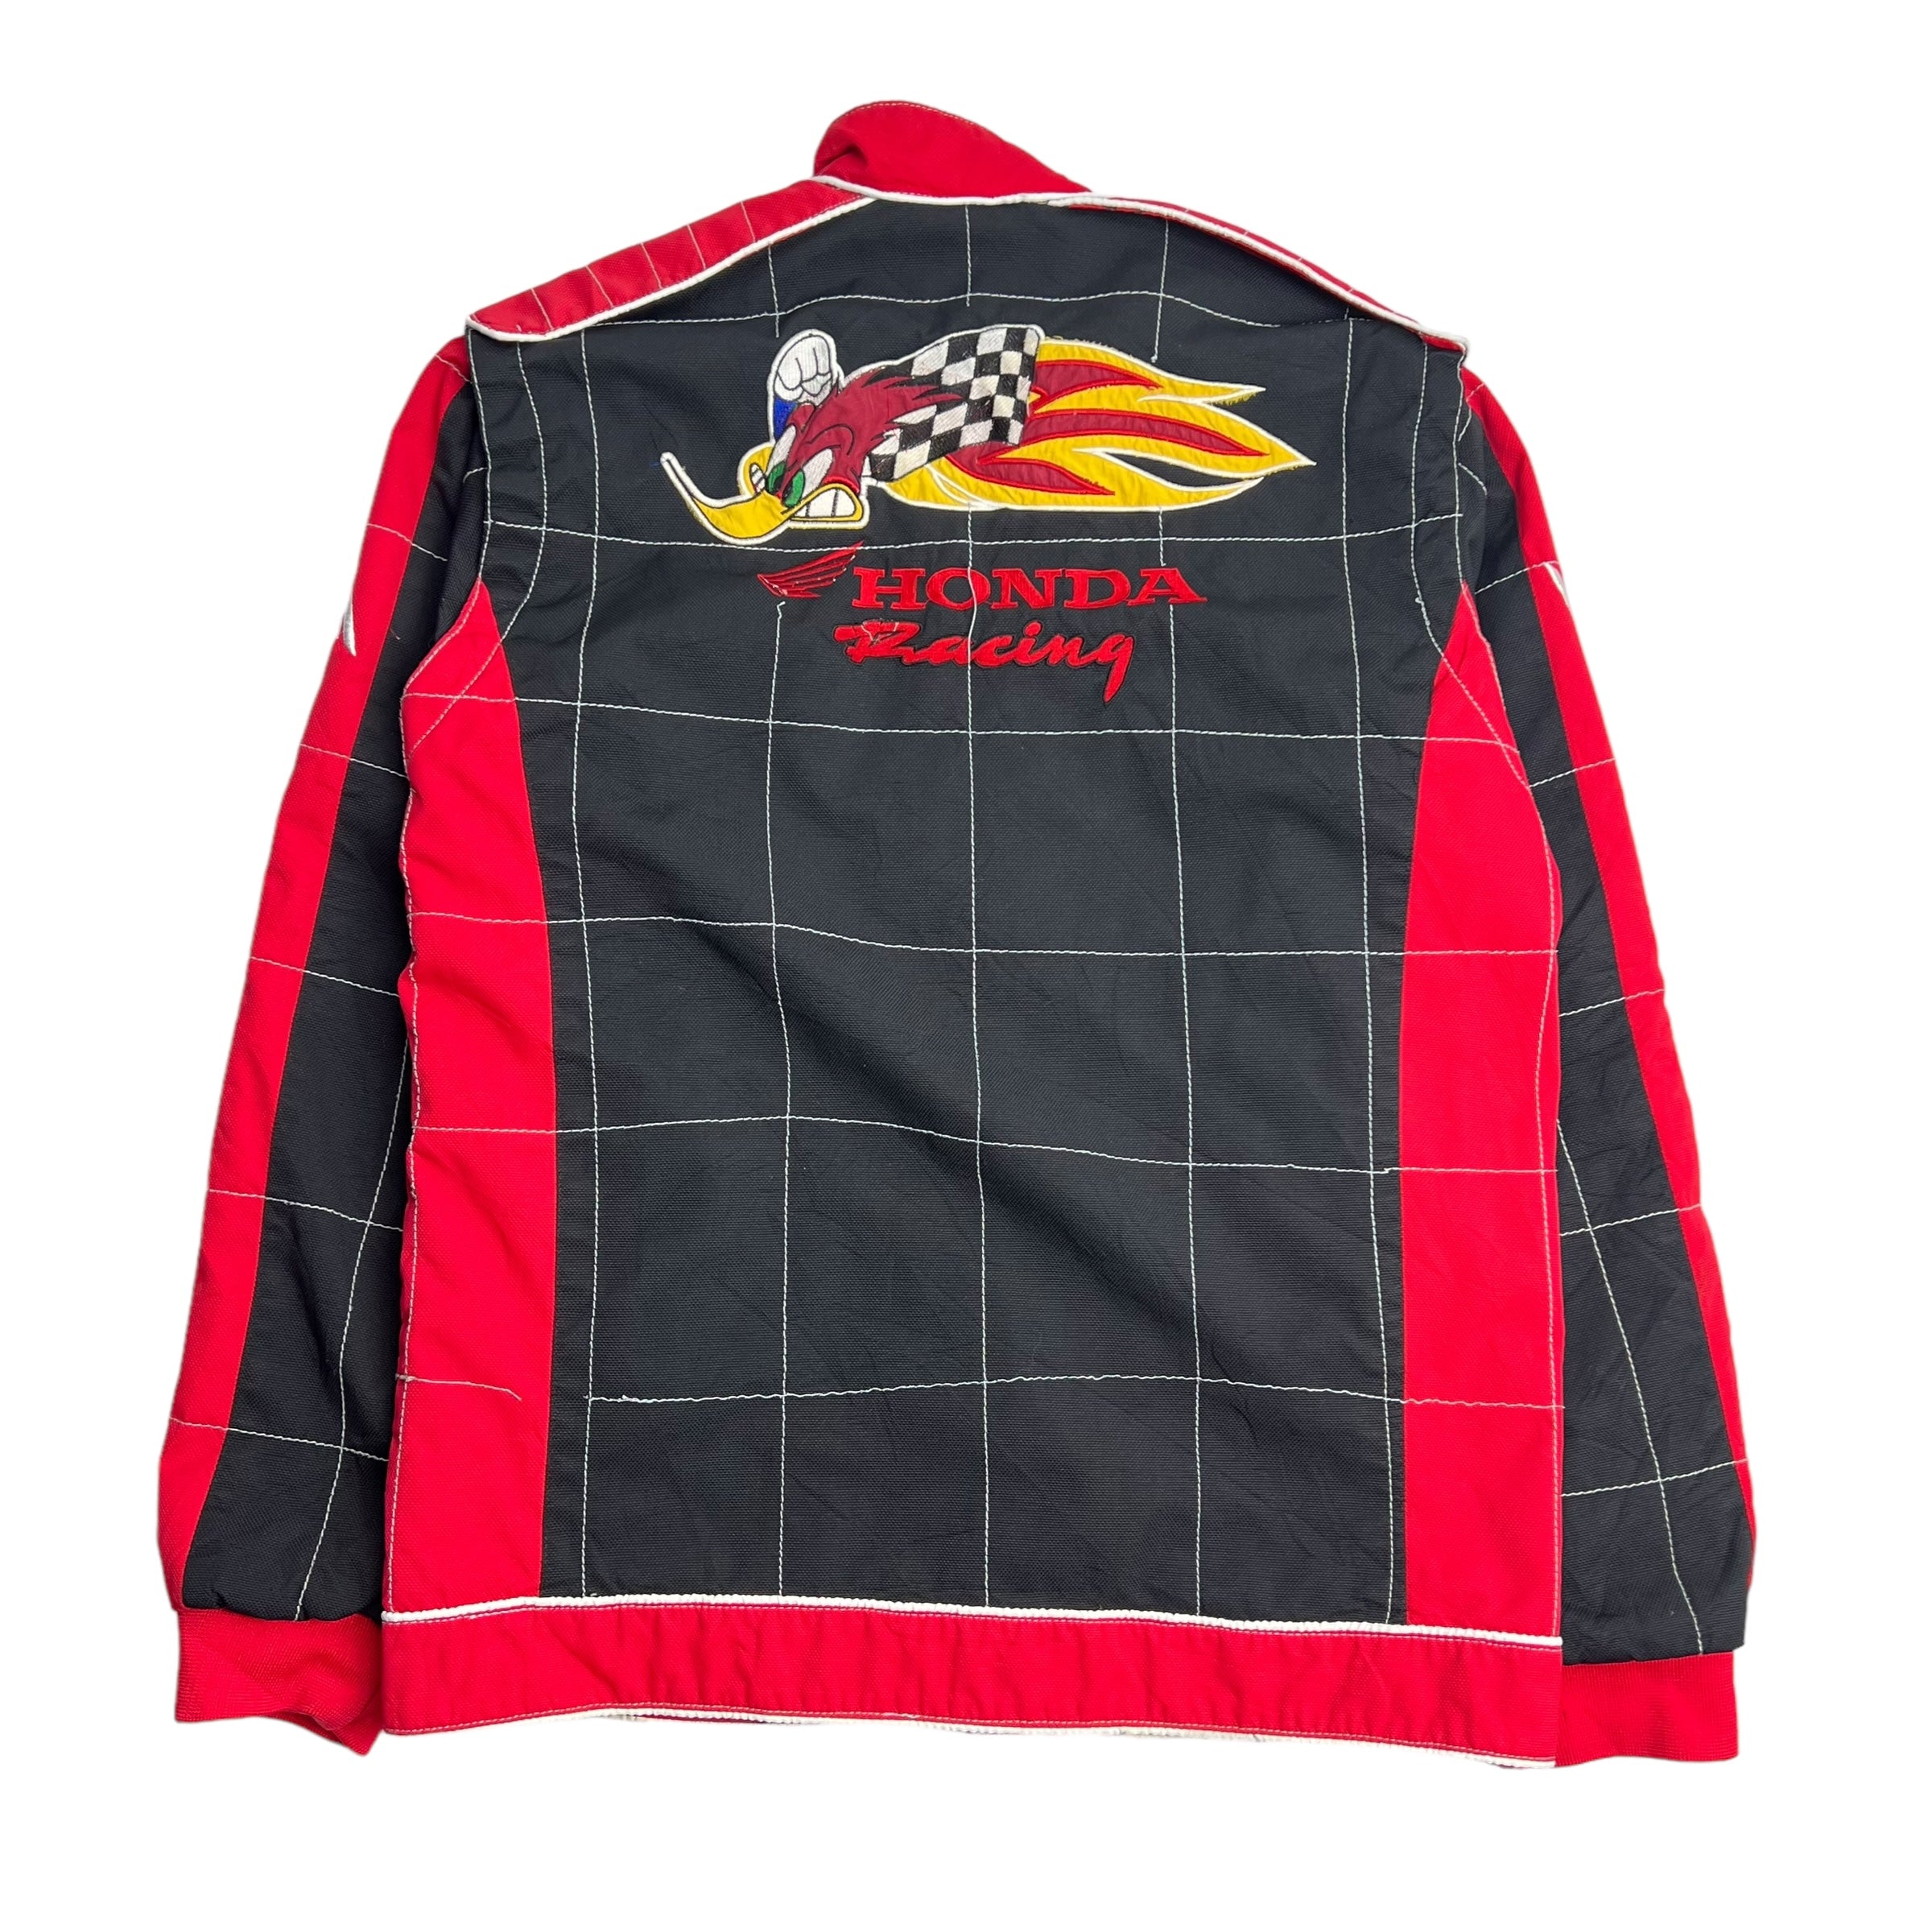 Vintage F1 Michael Schumacher Honda Racing Jacket Black